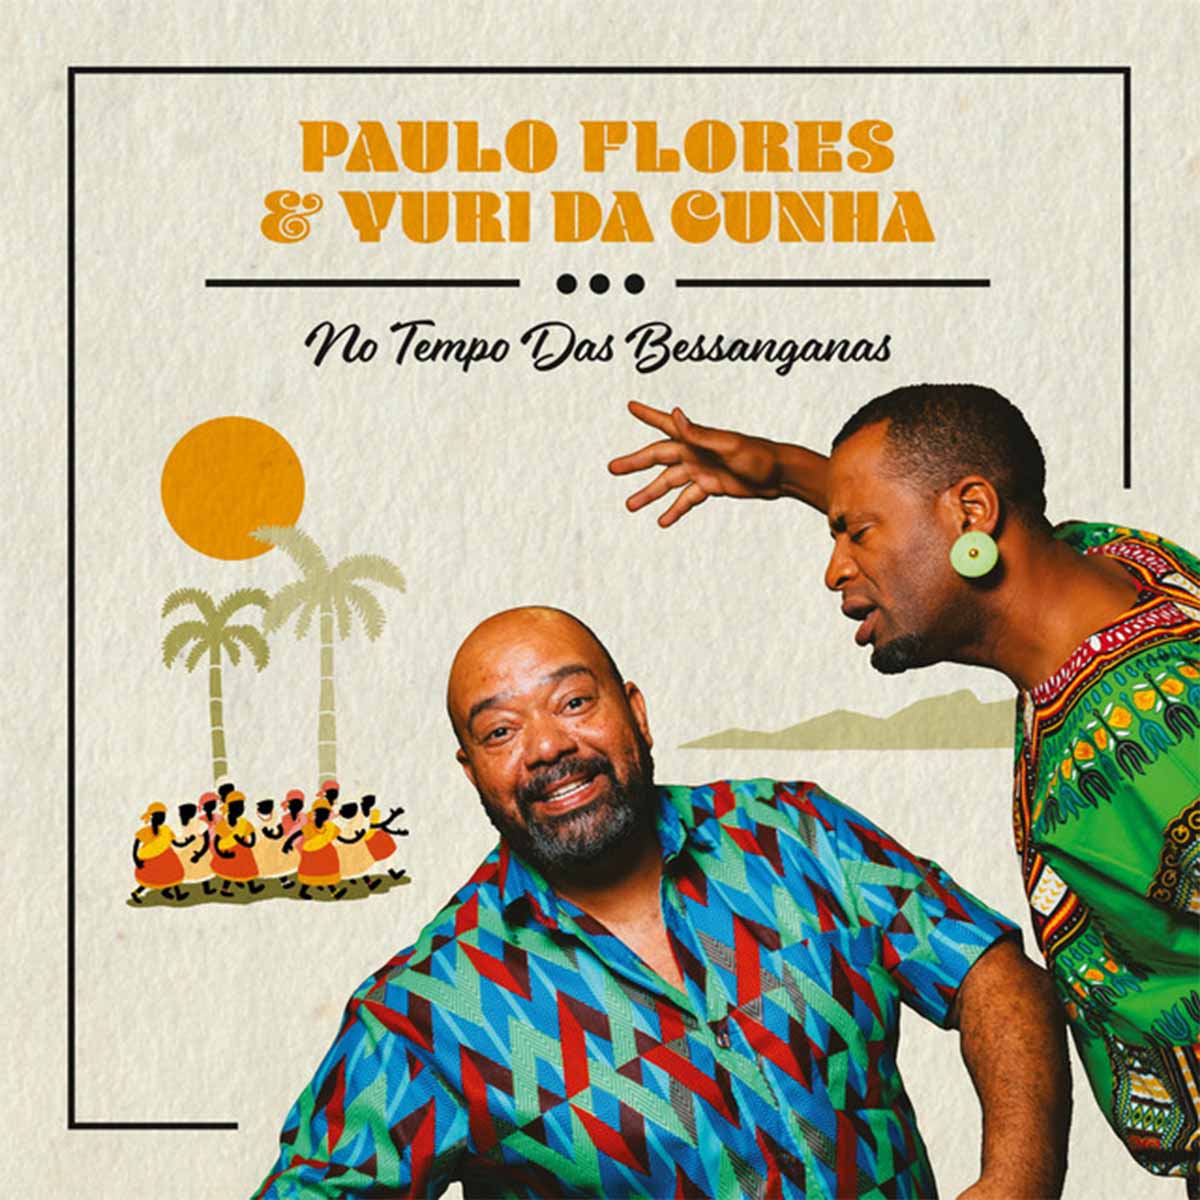 Paulo Flores e Yuri da Cunha – Chuva caiu (Choffeur de praça)